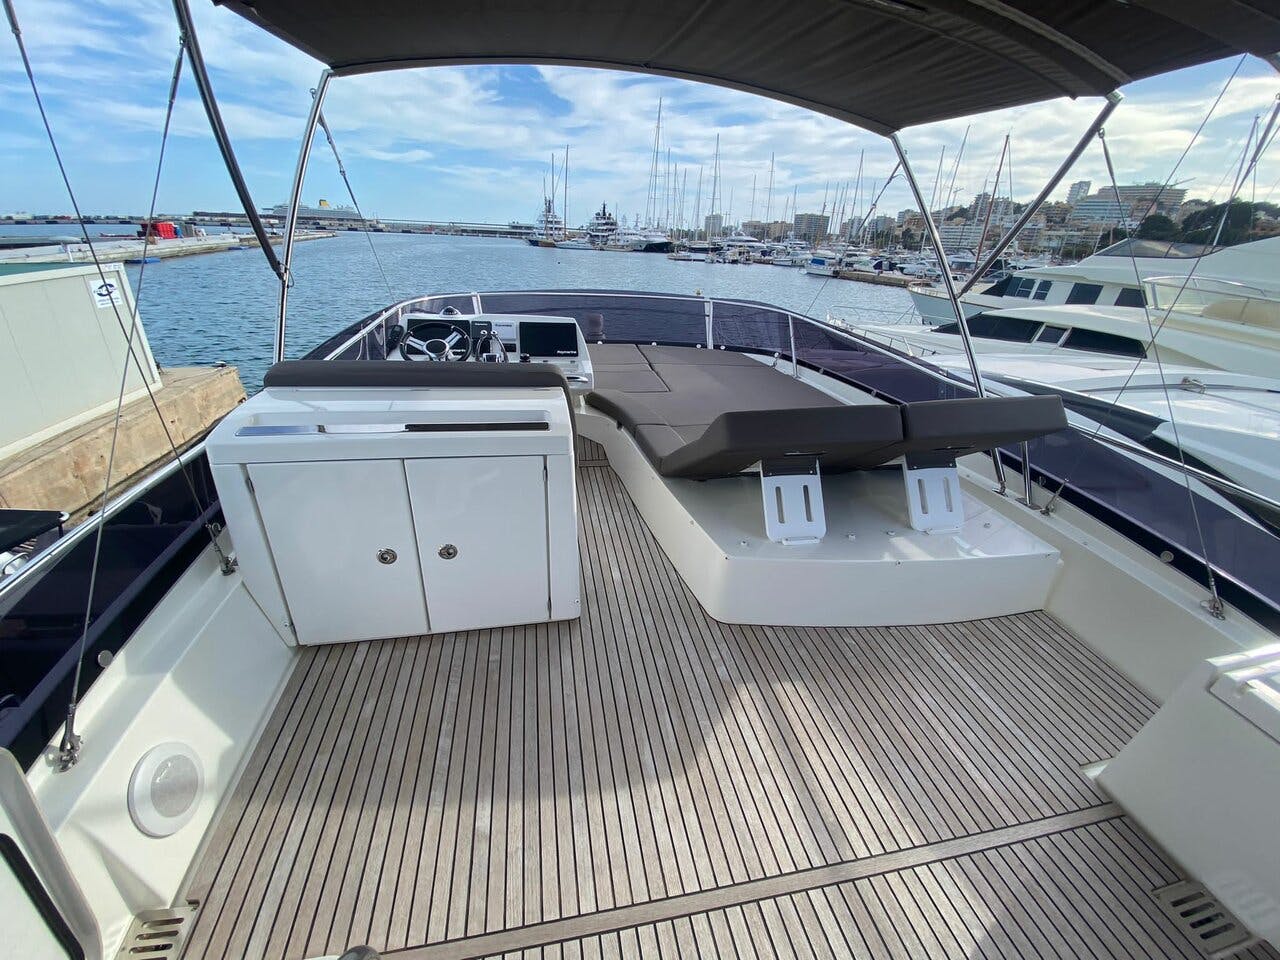 Book Prestige 560F Motor yacht for bareboat charter in Palma de Mallorca, Balearic Islands, Spain with TripYacht!, picture 8